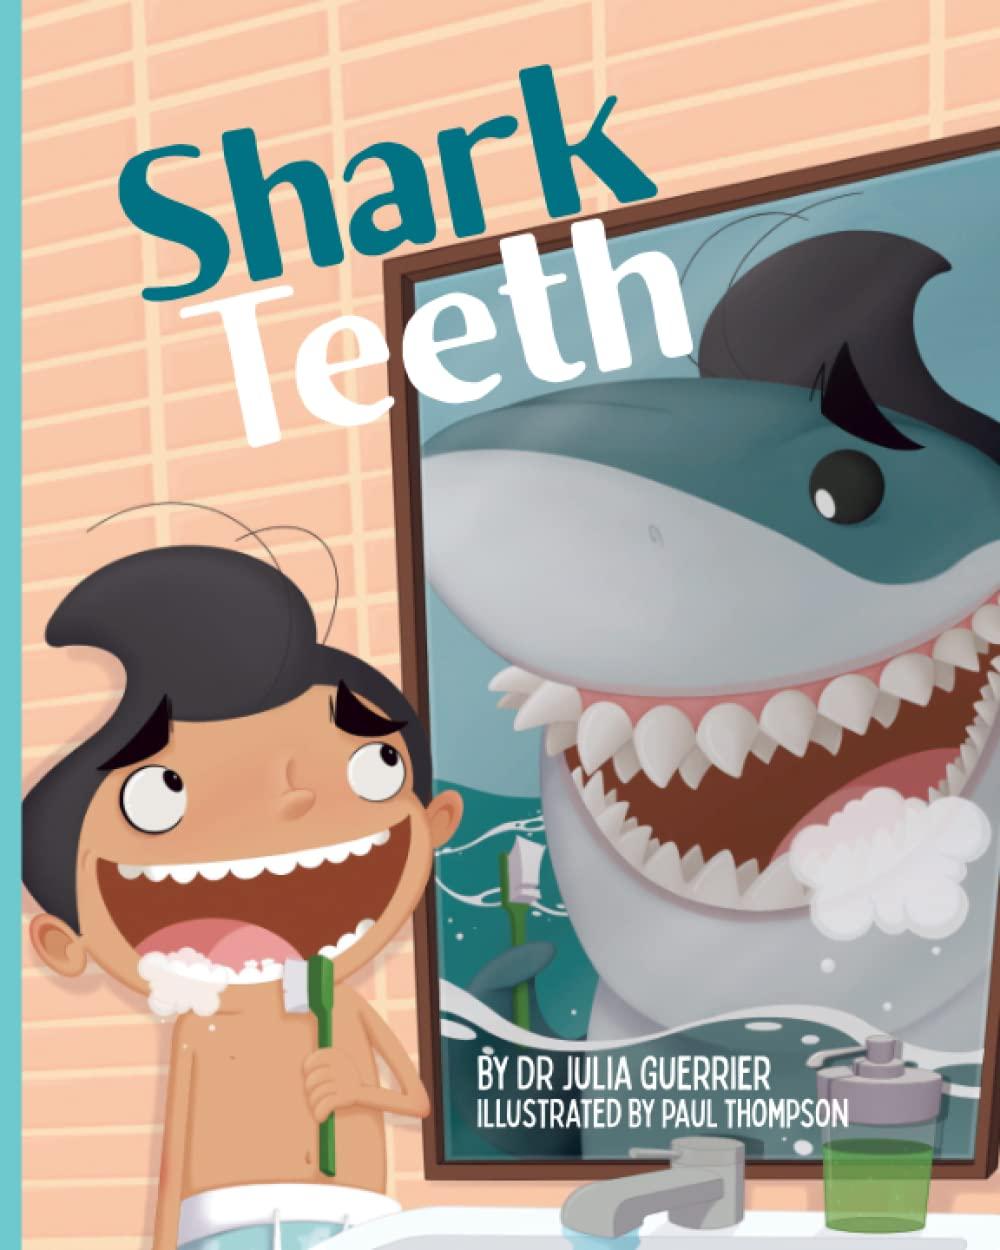 Shark Teeth book cover